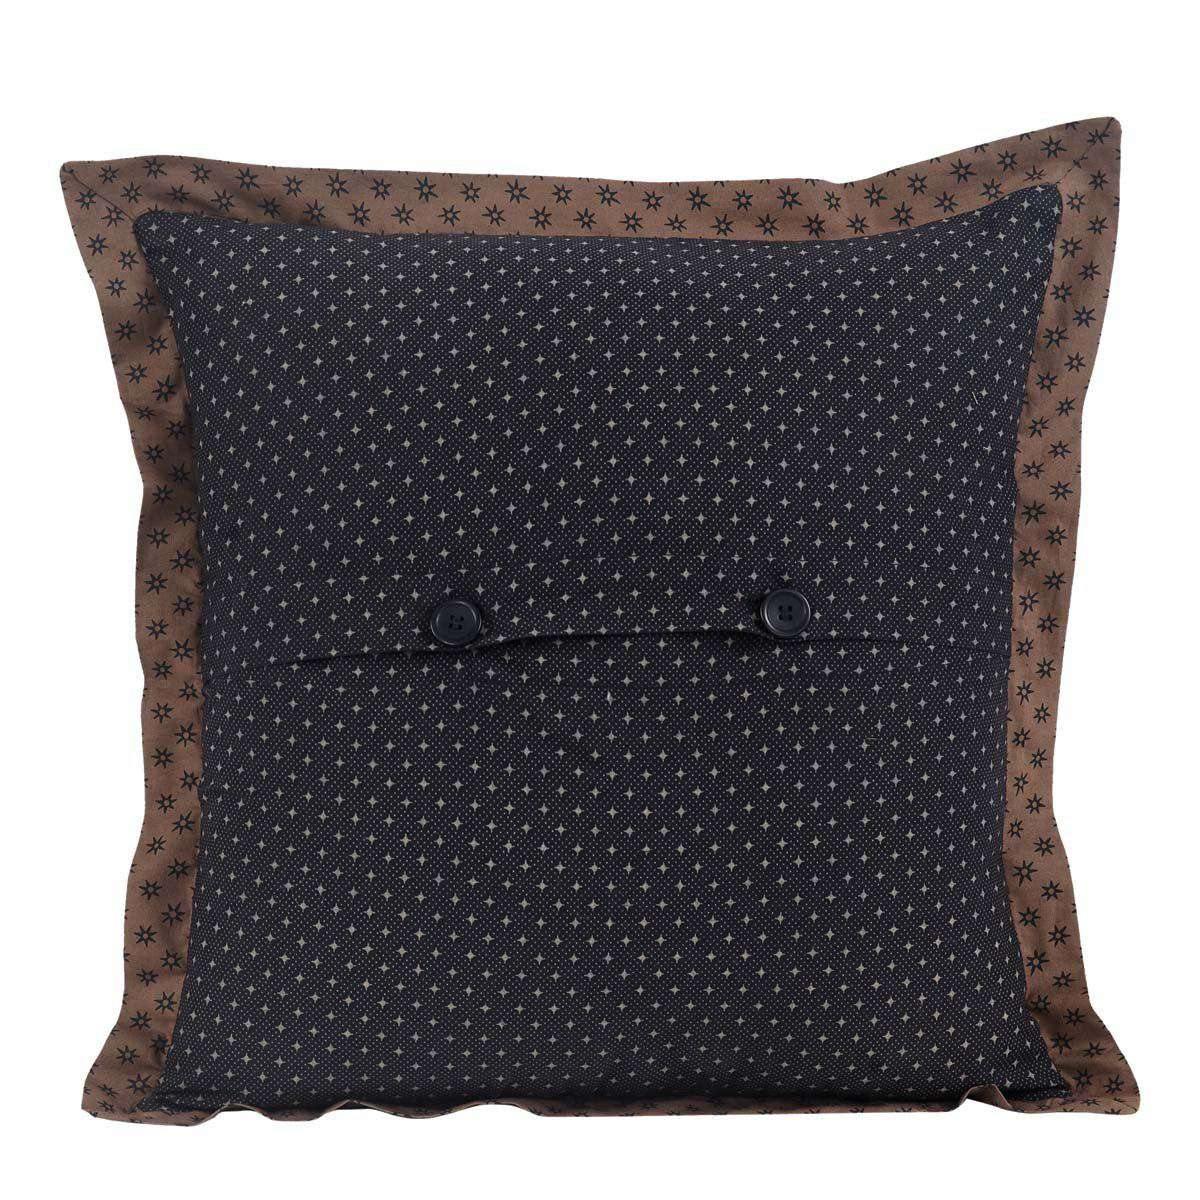 Bingham Star Pillow Fabric 16x16 back